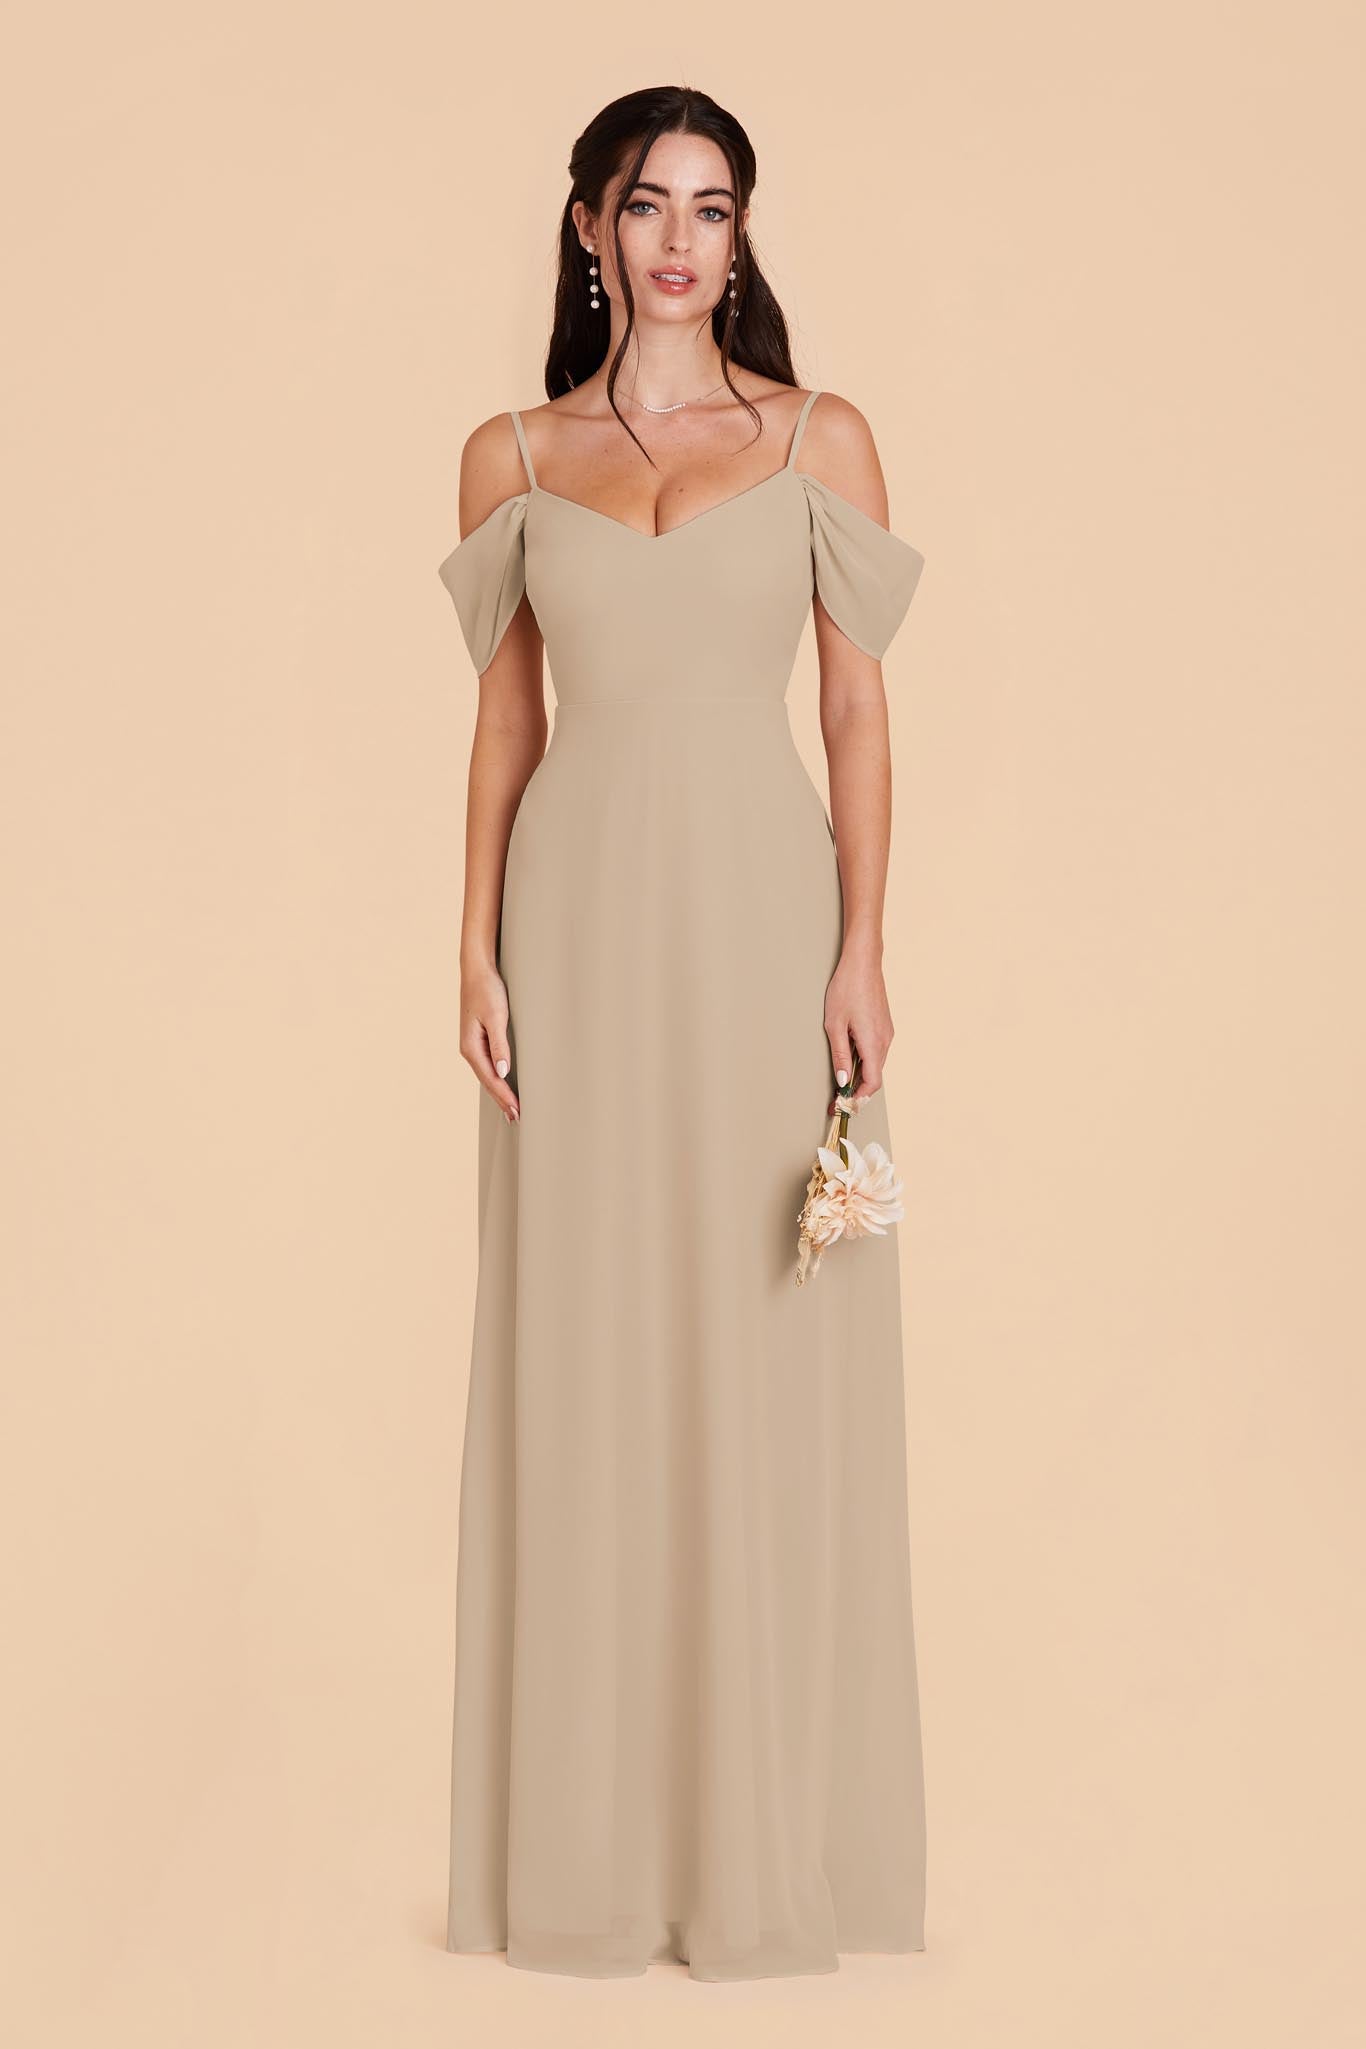 Almond Devin Convertible Chiffon Dress by Birdy Grey